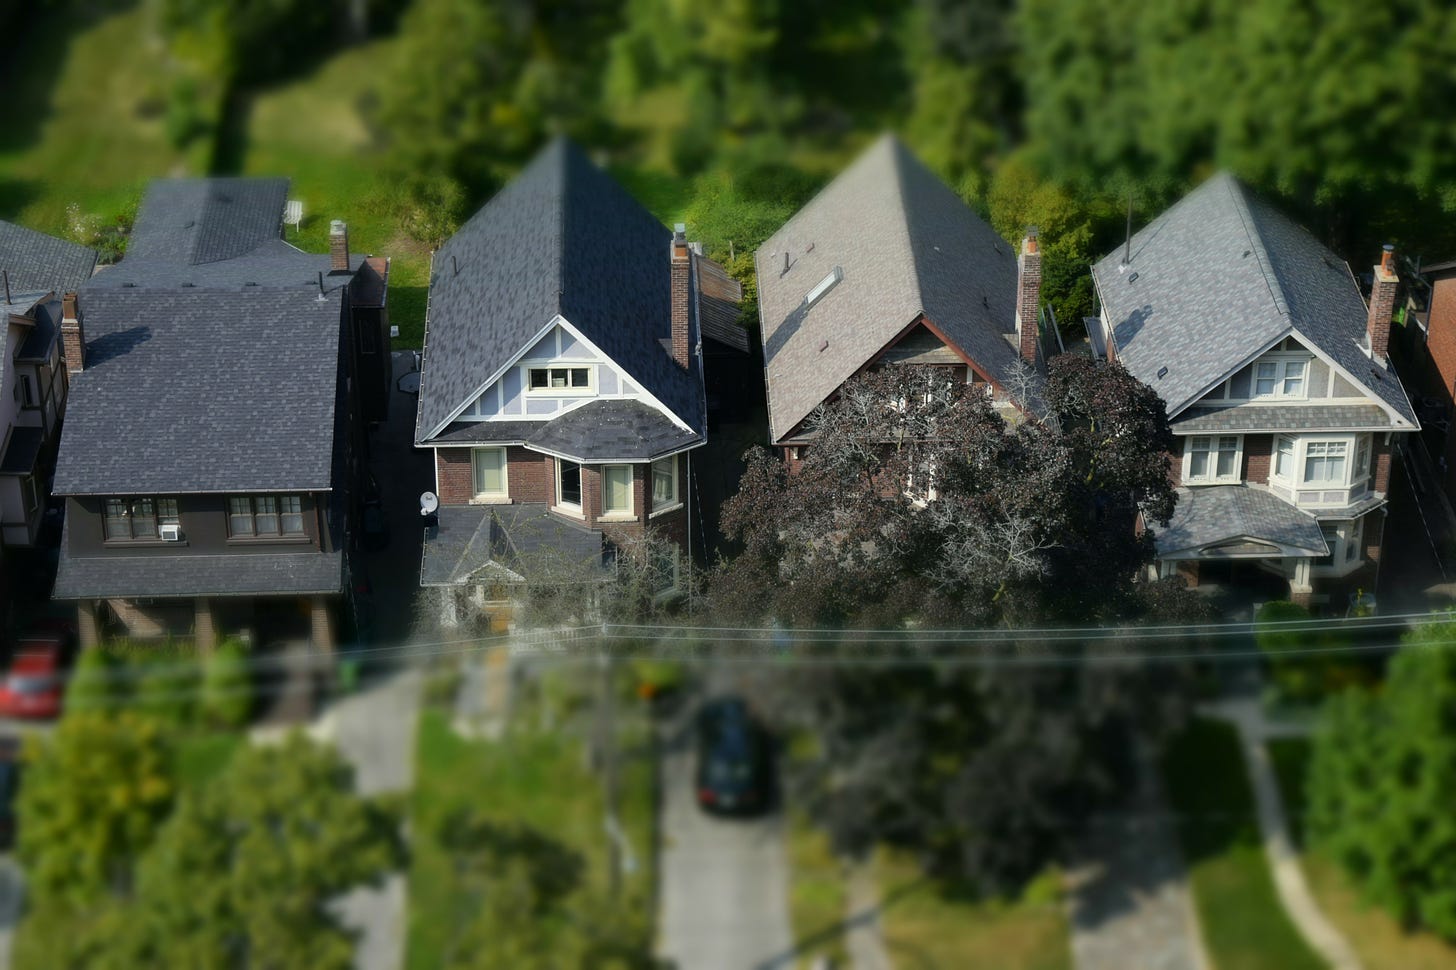 Neighborhood houses viewed from above.